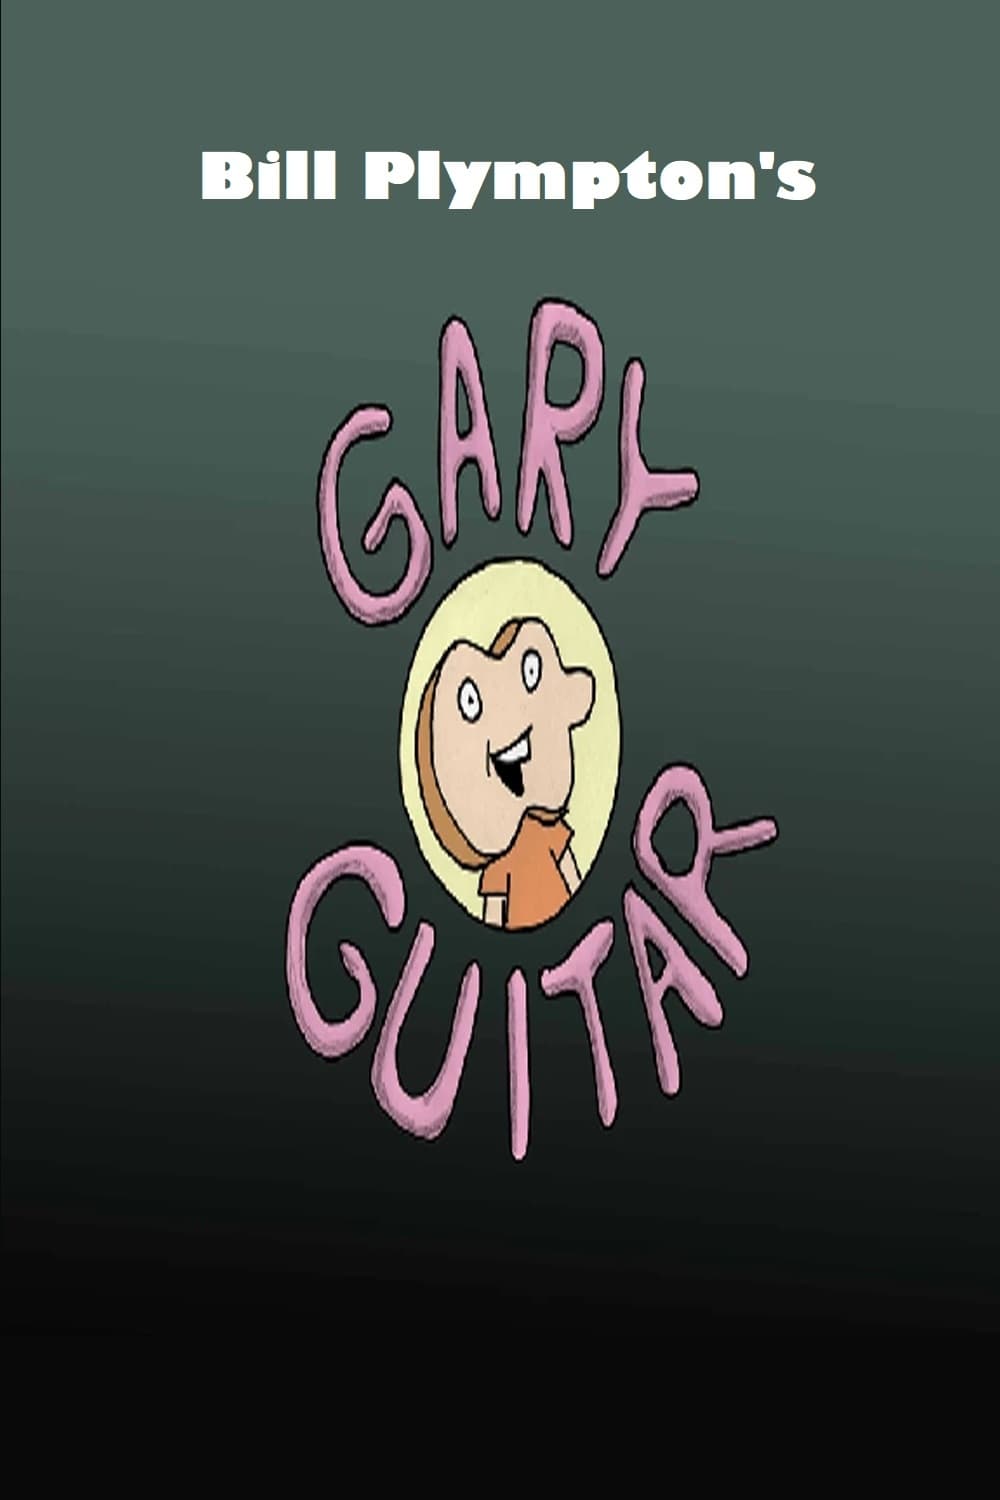 Gary Guitar